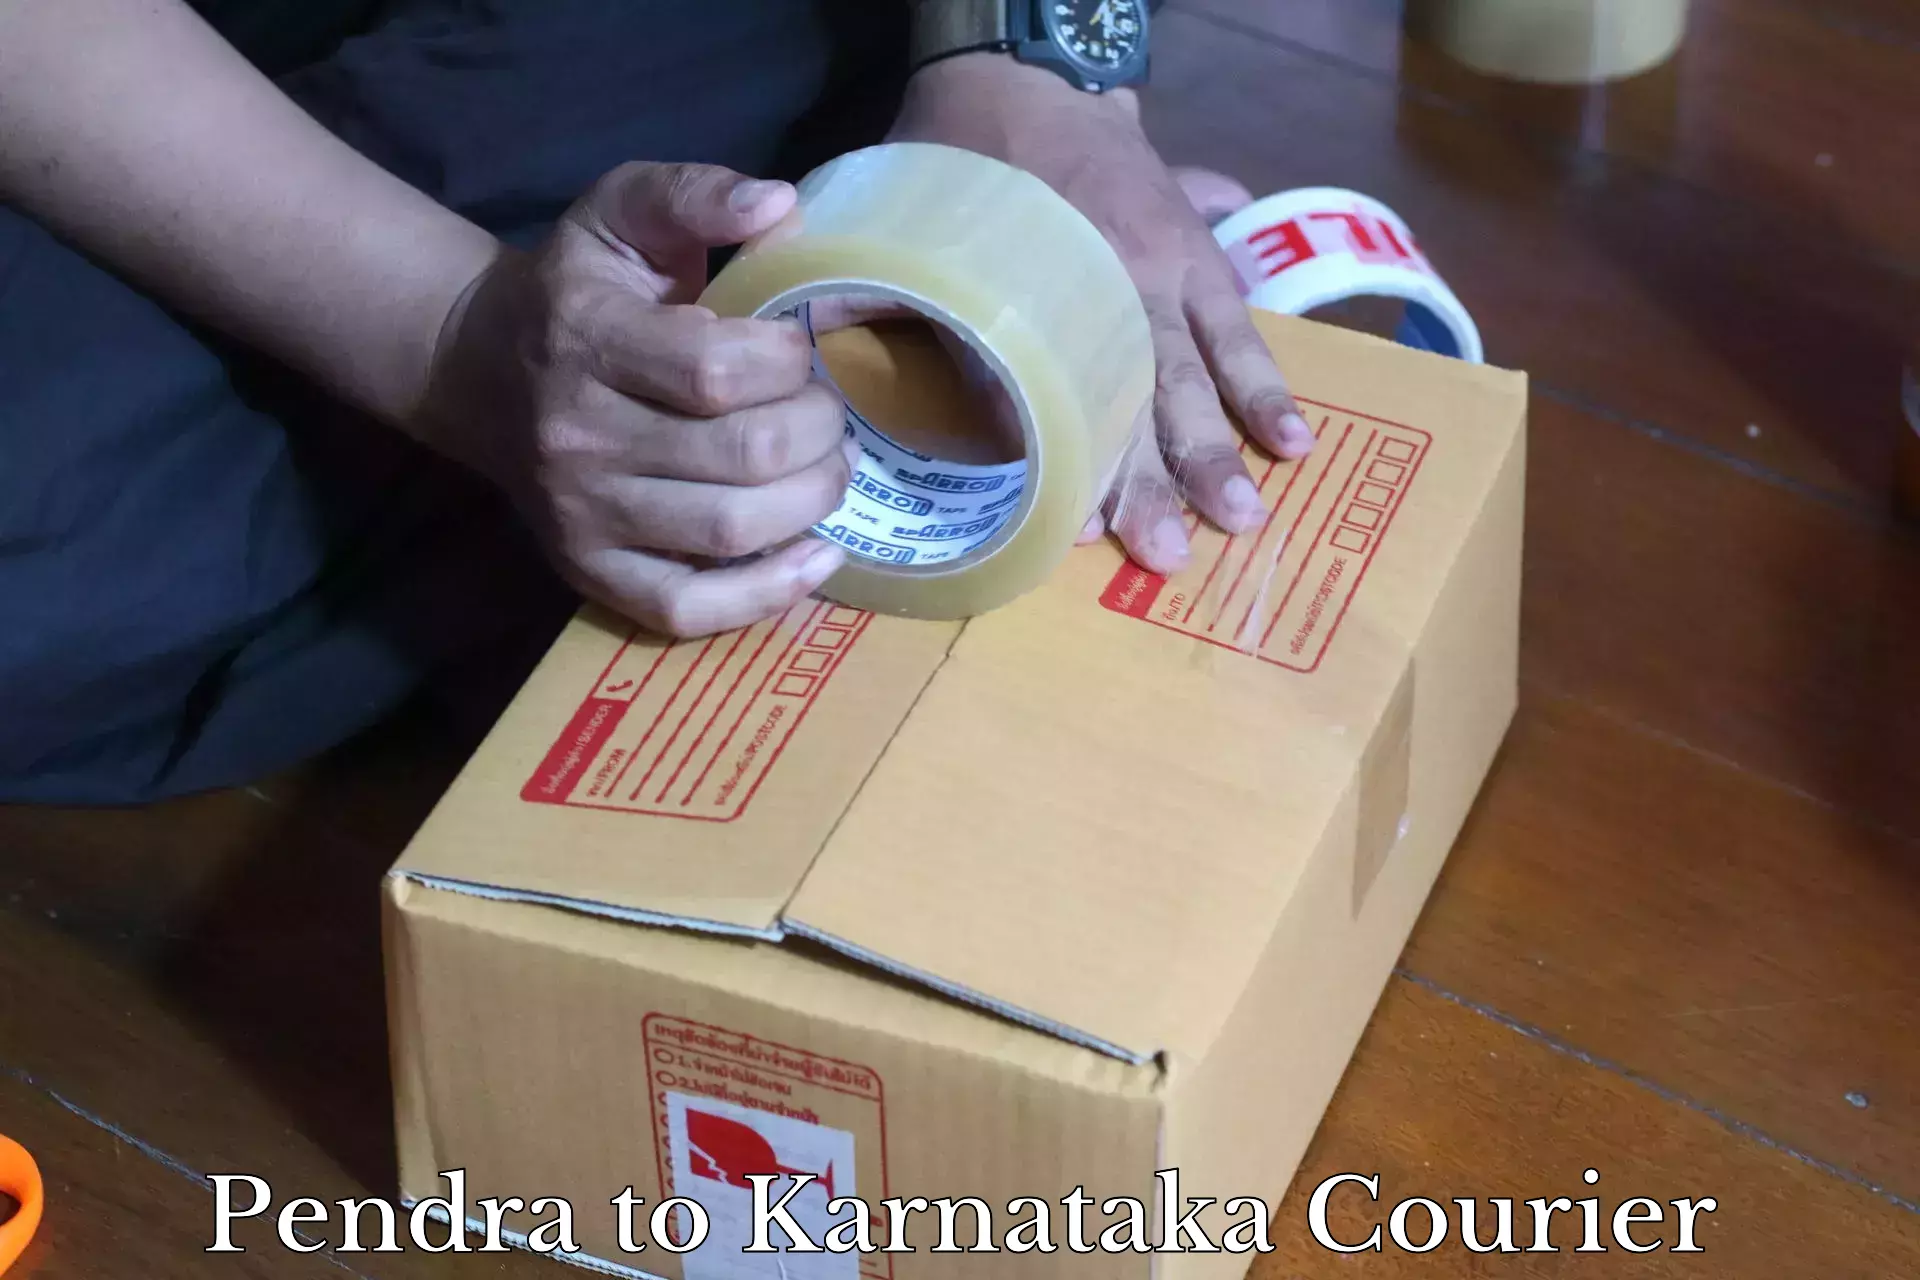 Shipping and handling Pendra to Karnataka